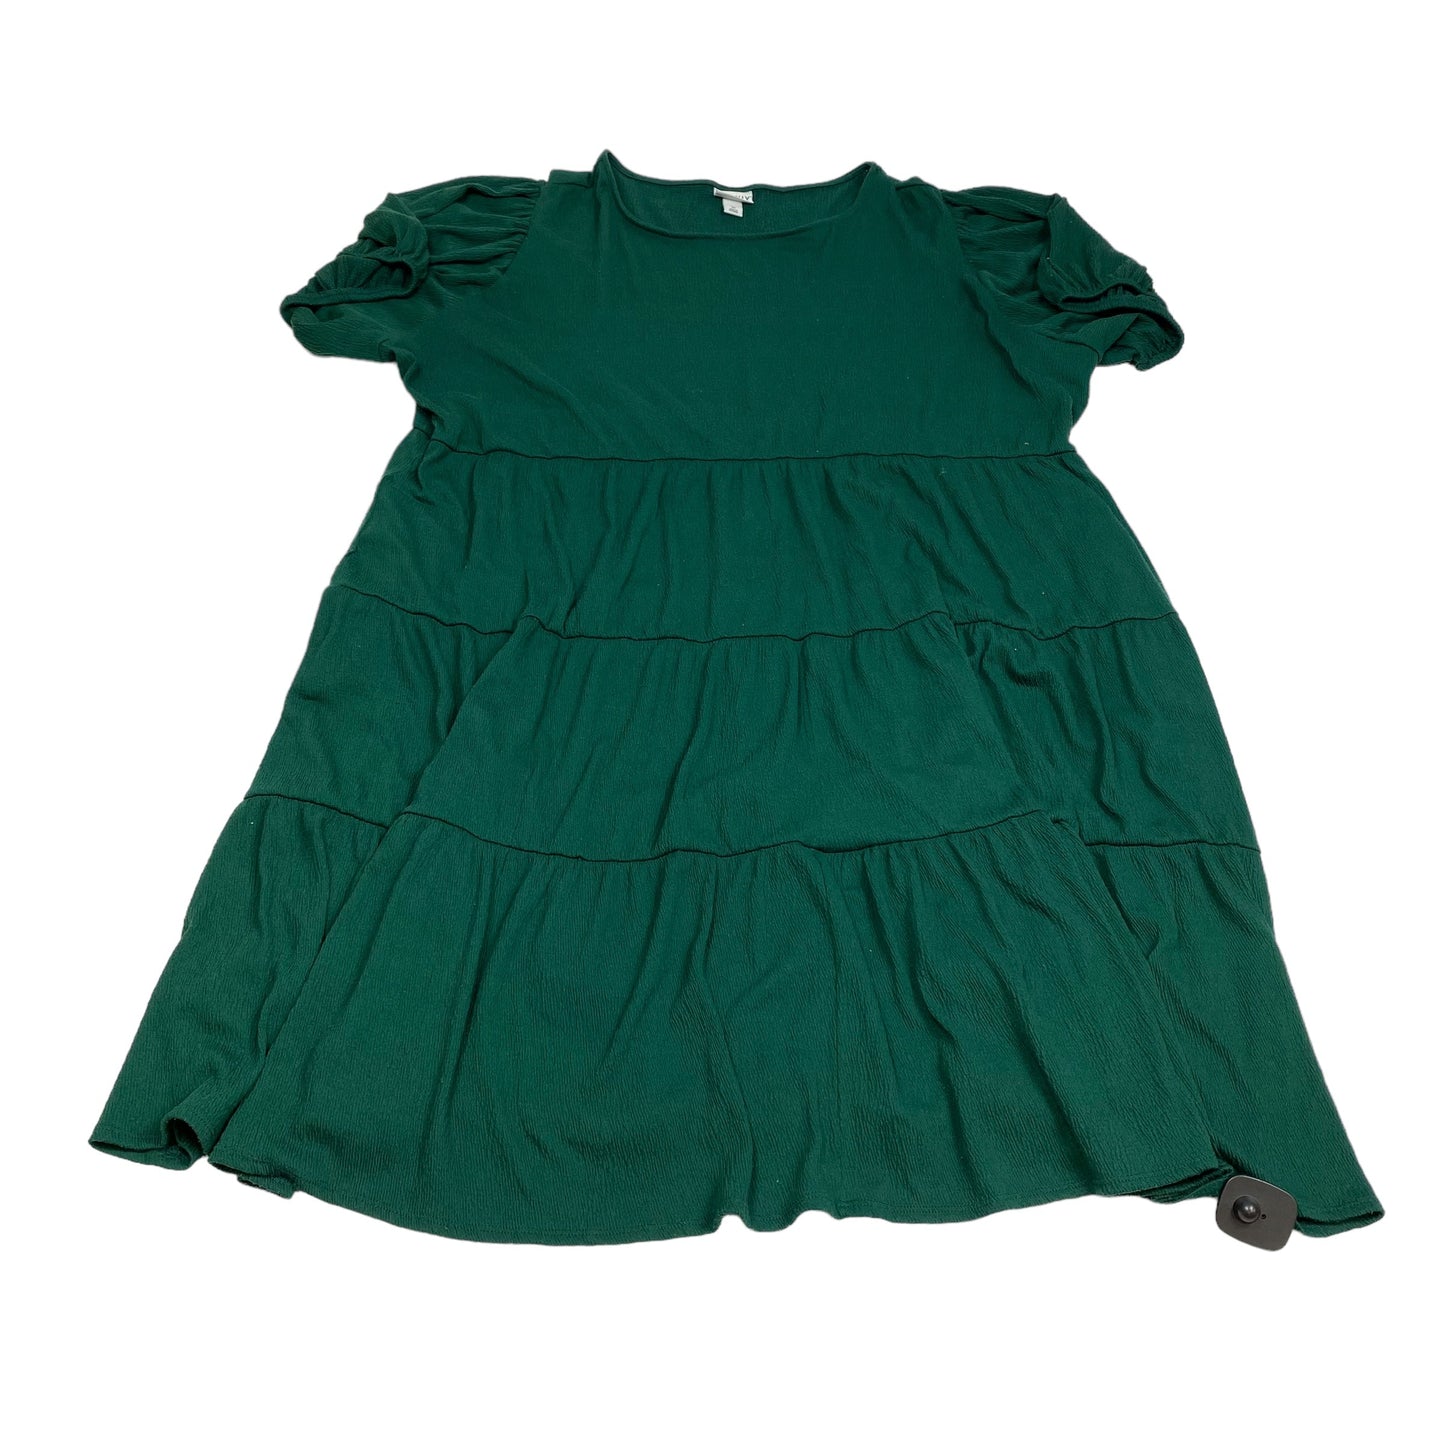 Green Dress Casual Midi Ava & Viv, Size 3x